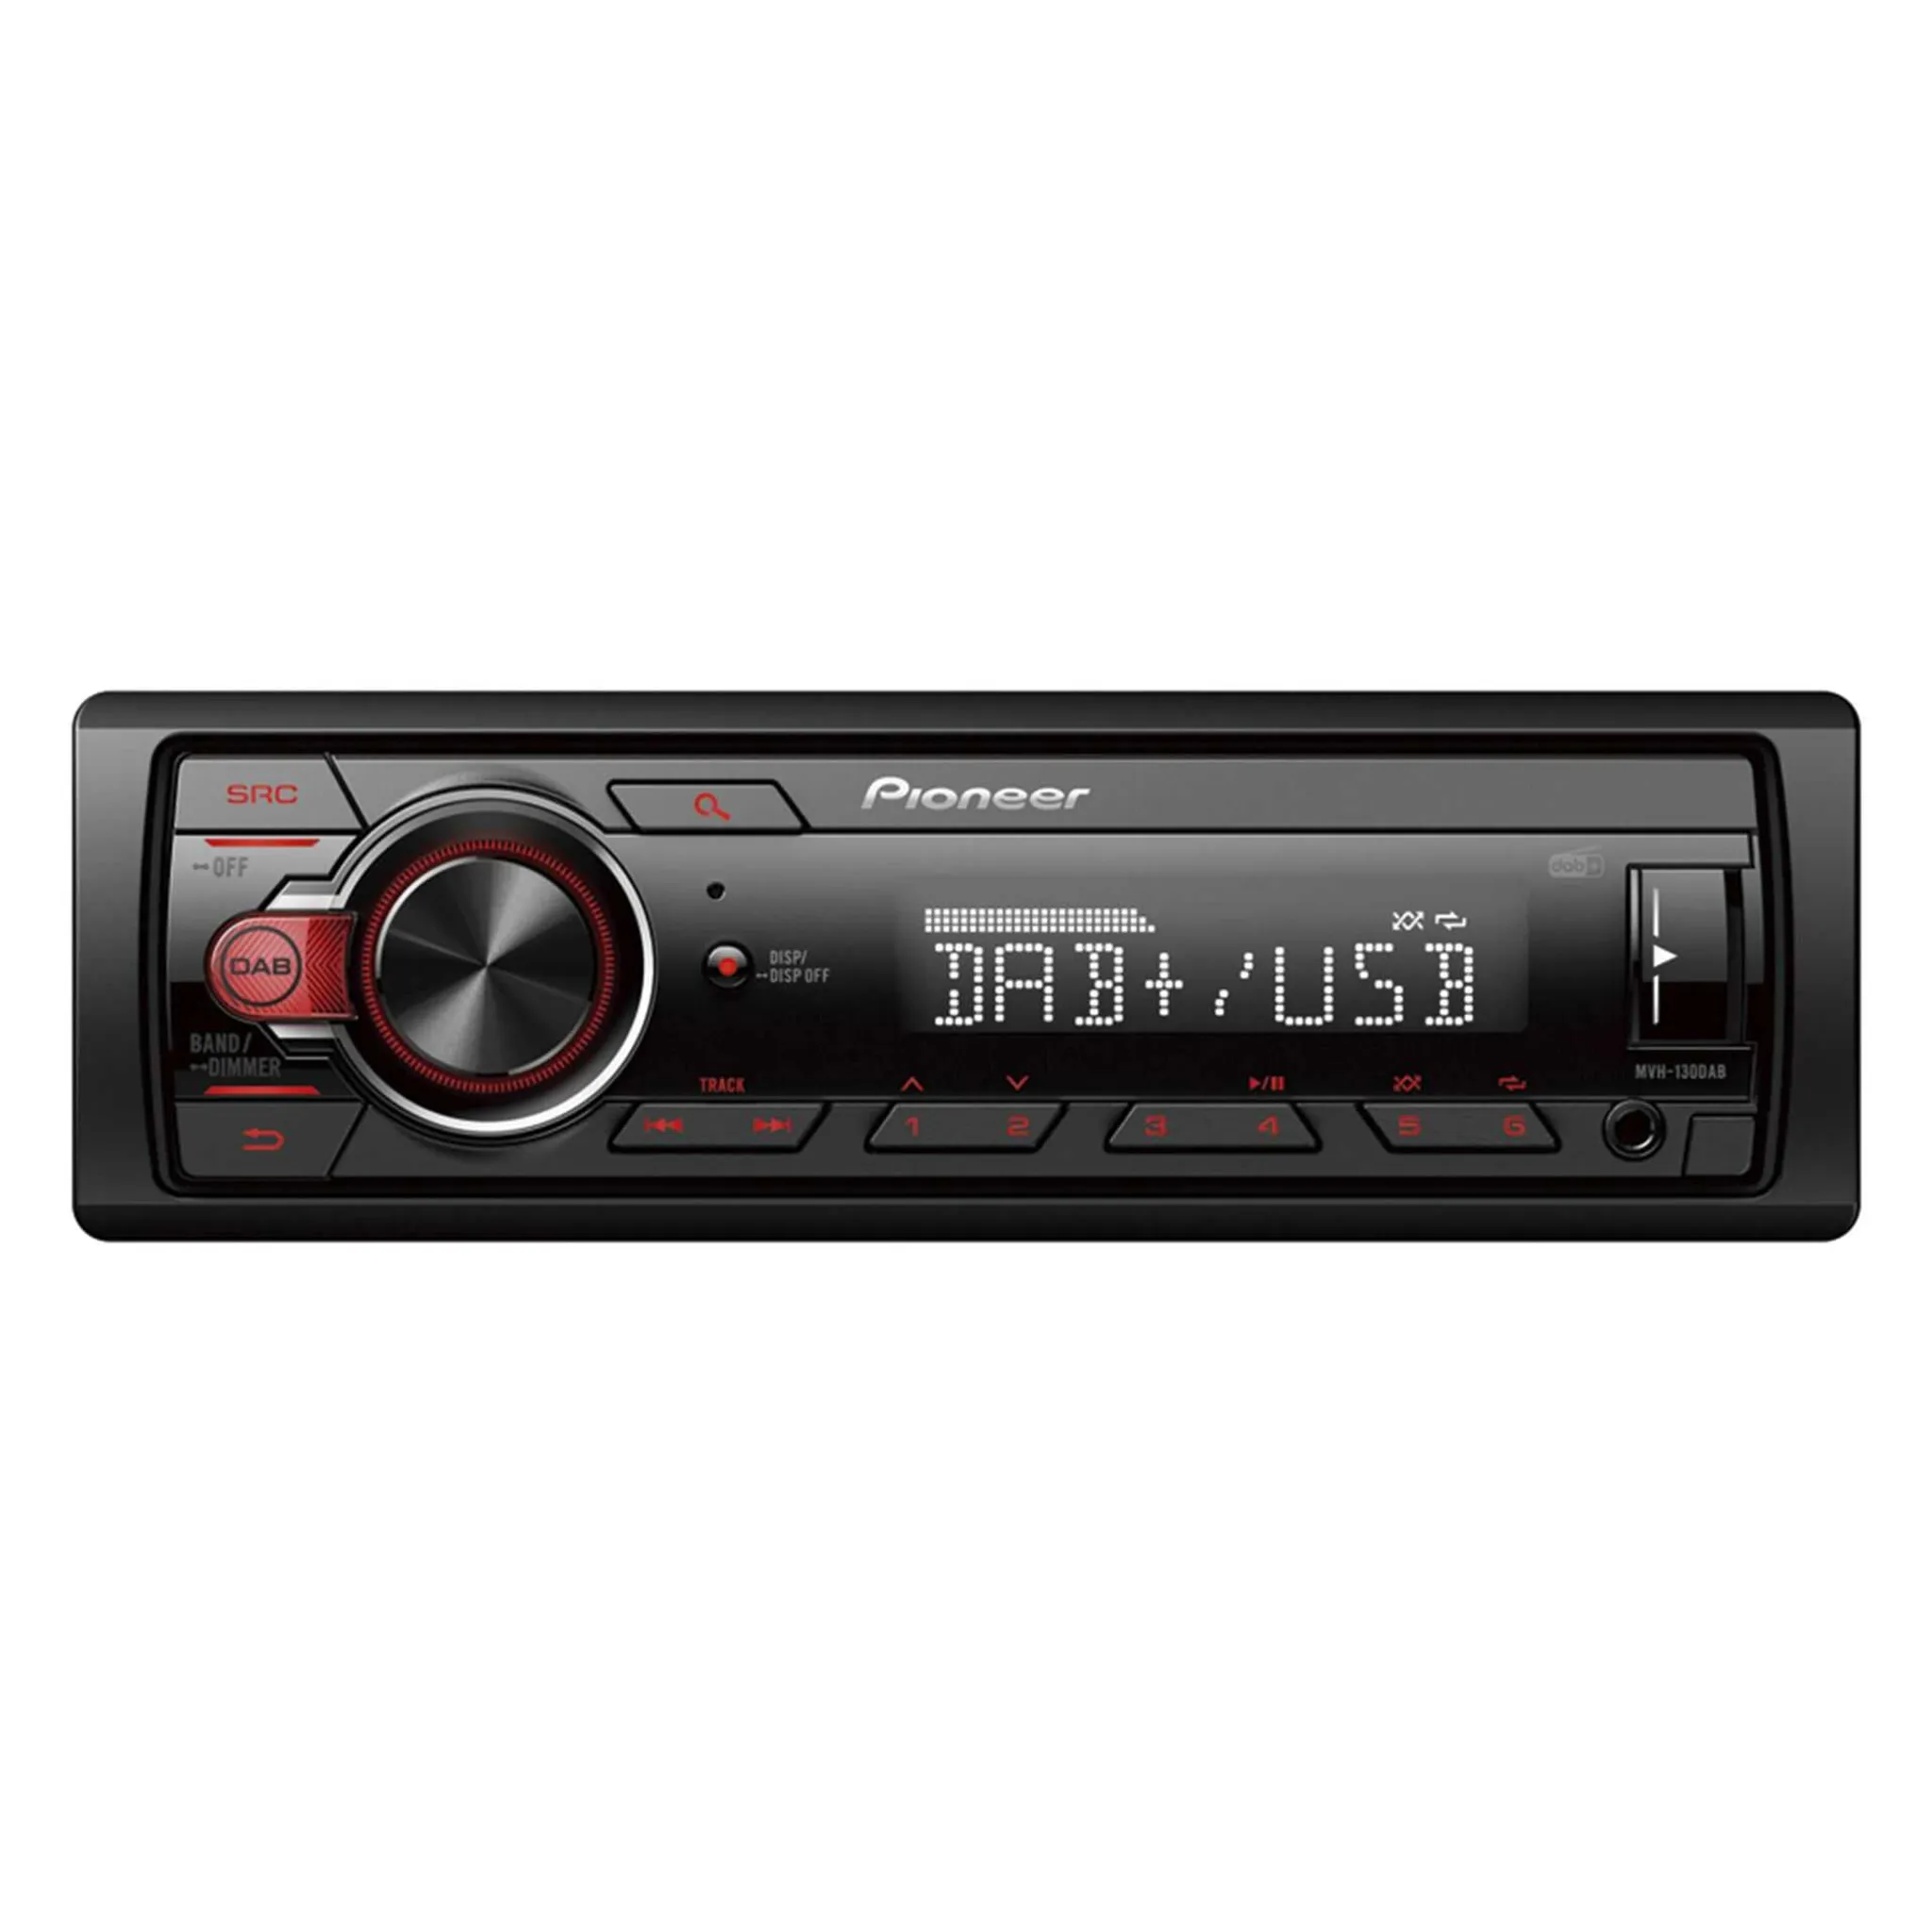 XOMAX XM-V780 Autoradio mit 7 Zoll Touchscreen Bildschirm (kapazitiv,  ausfahrbar), Bluetooth, USB, SD, 1 DIN